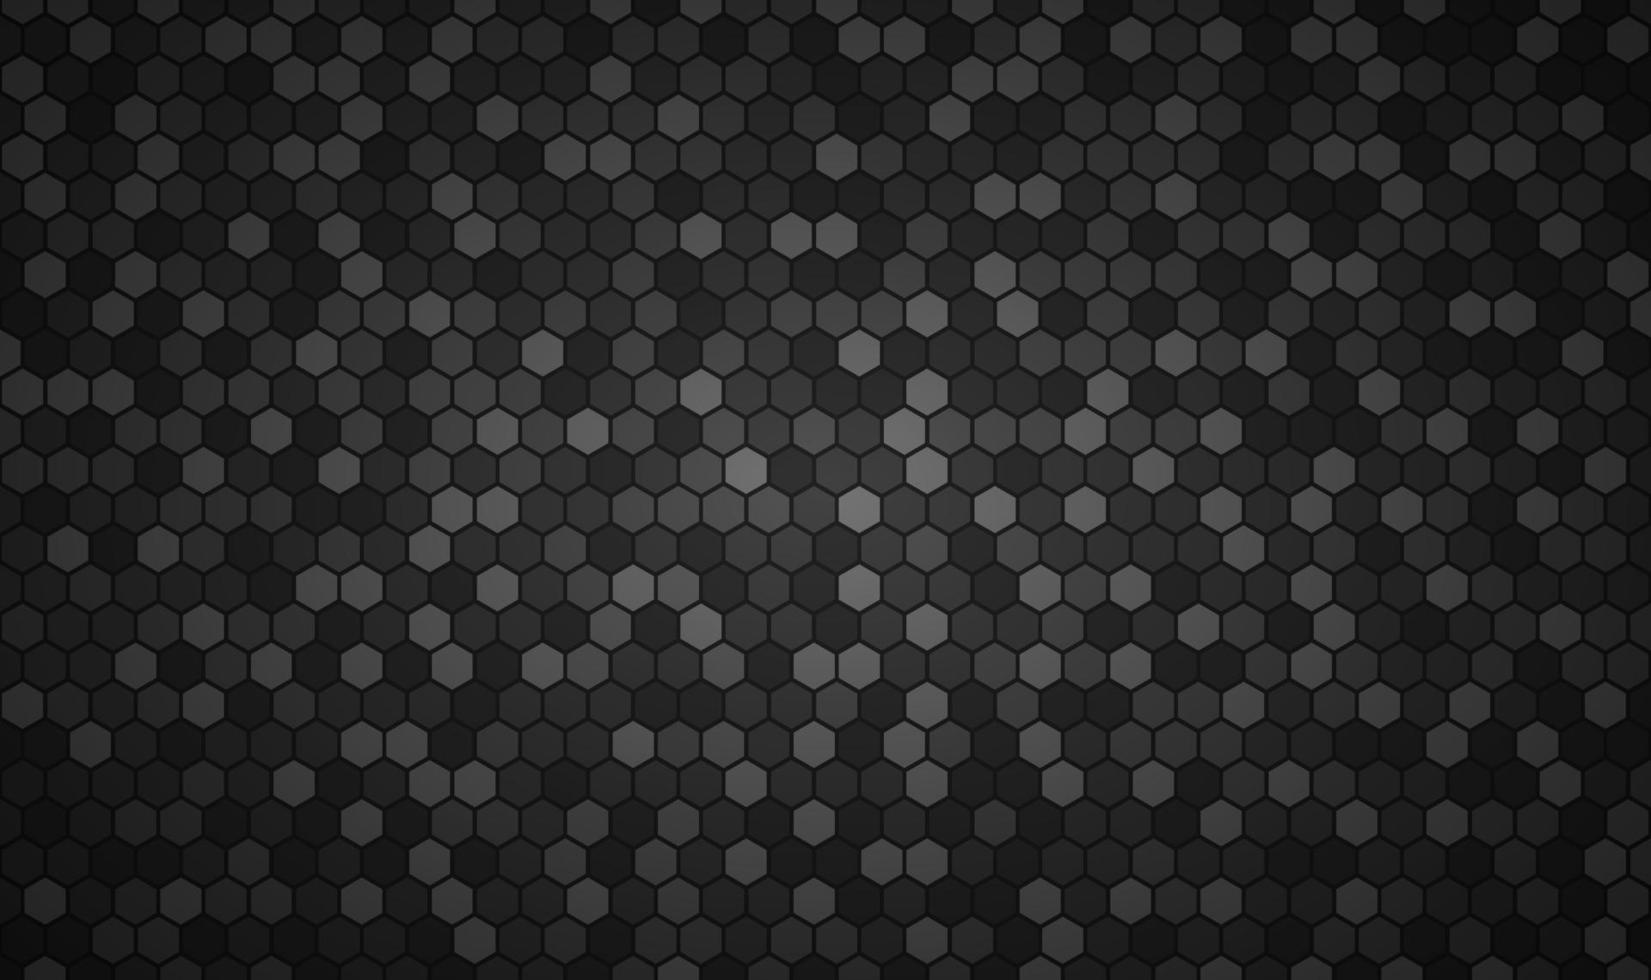 Abstract hexagons random background. Vector illustration